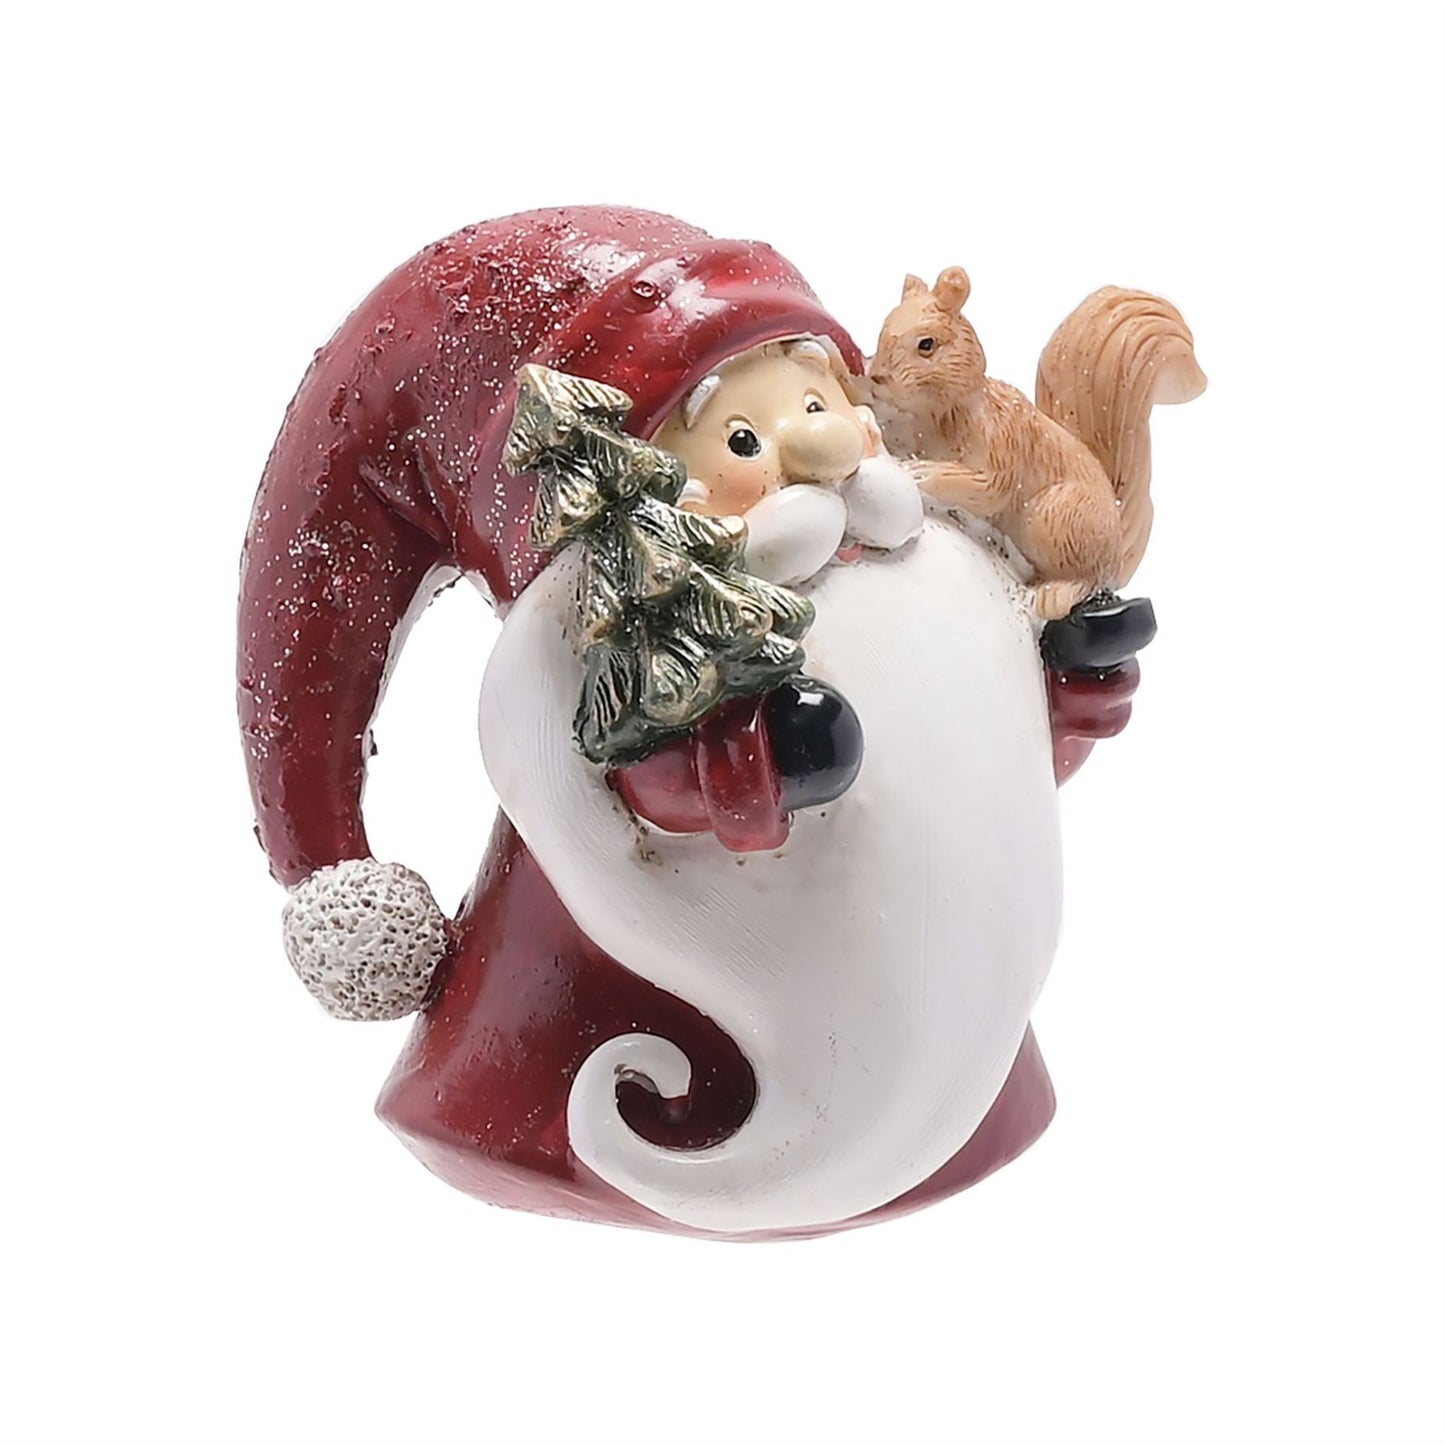 Santa with Christmas Tree Figurine